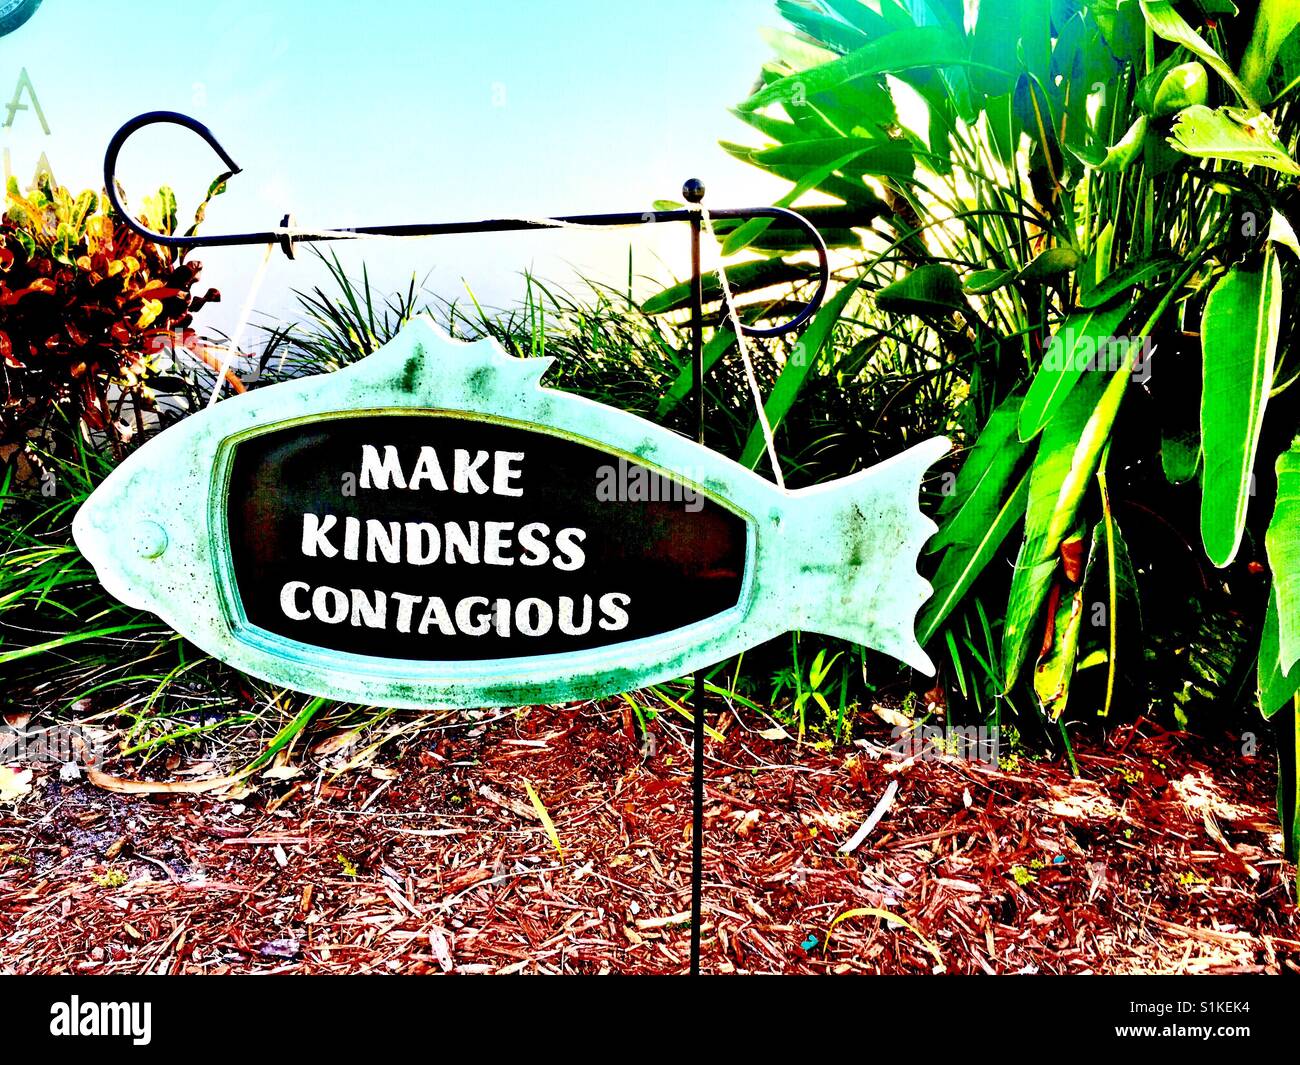 Make kindness contagious Stock Photo